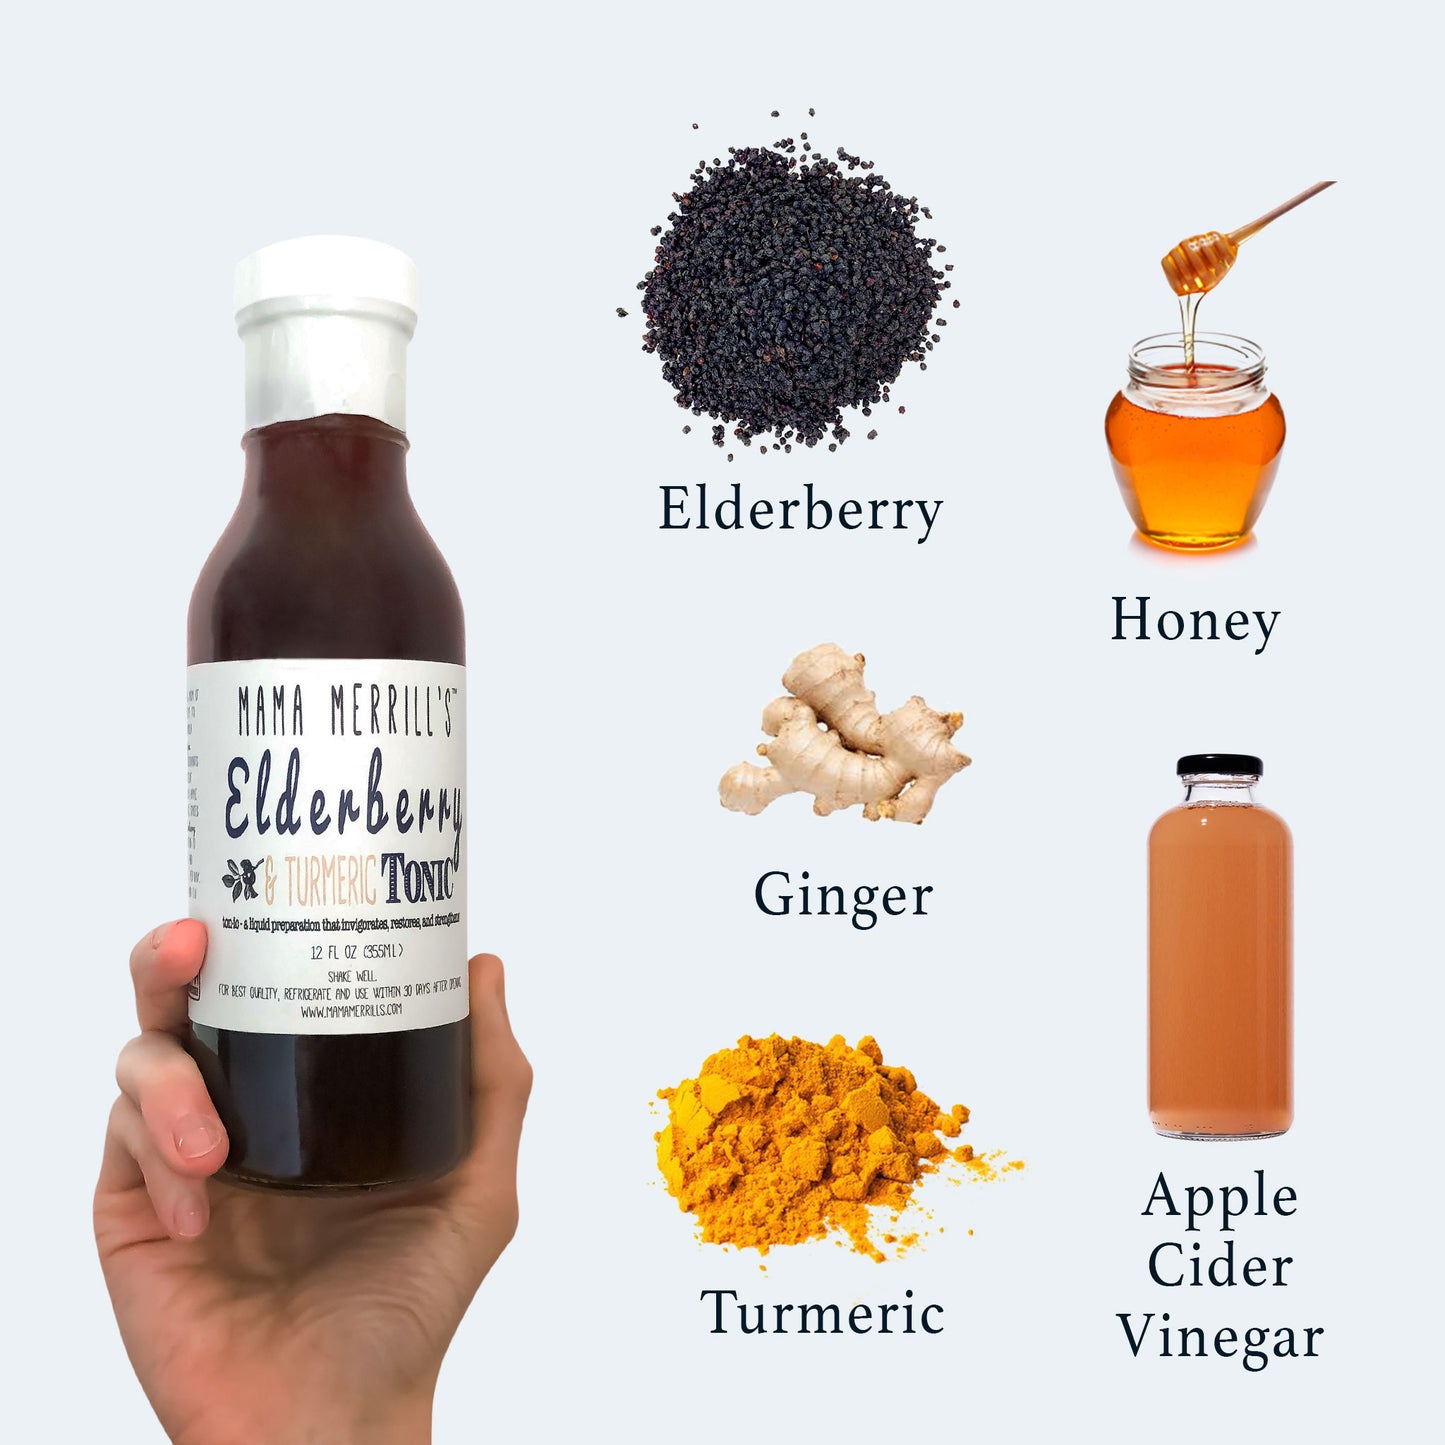 Elderberry & Turmeric Original Tonic